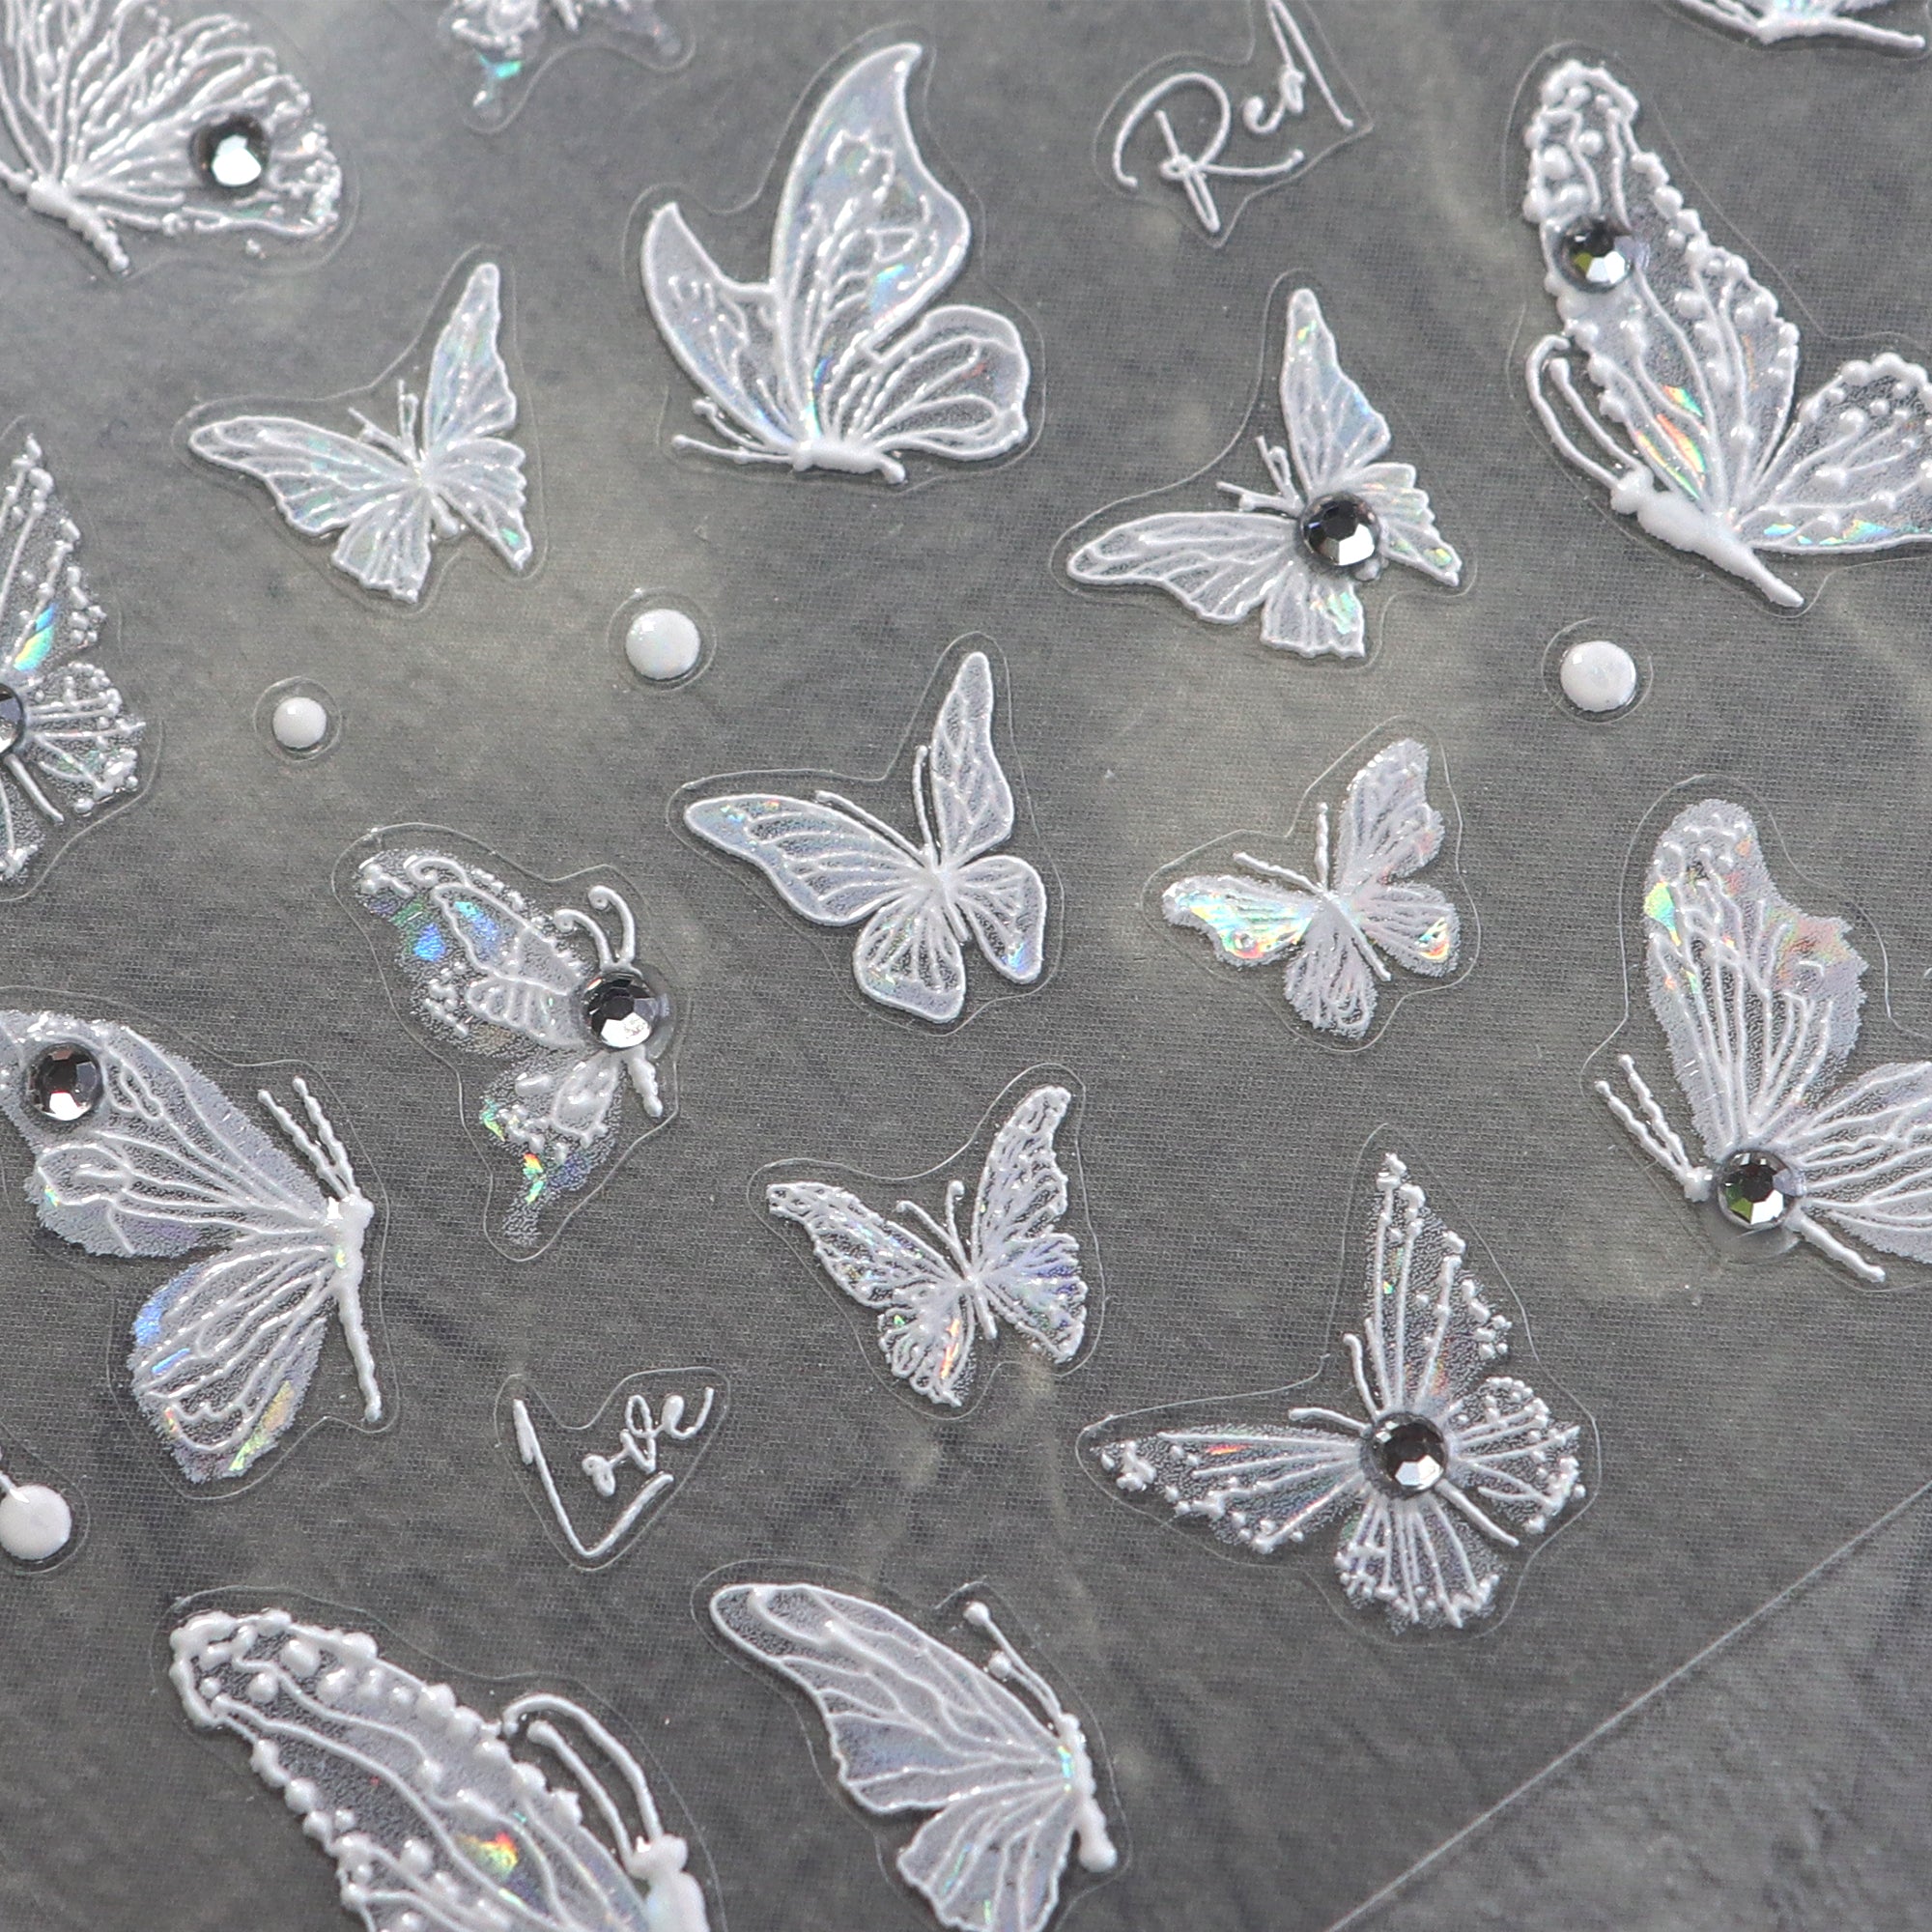 Rhinestone Nail Sticker - Dreamy White Butterfly